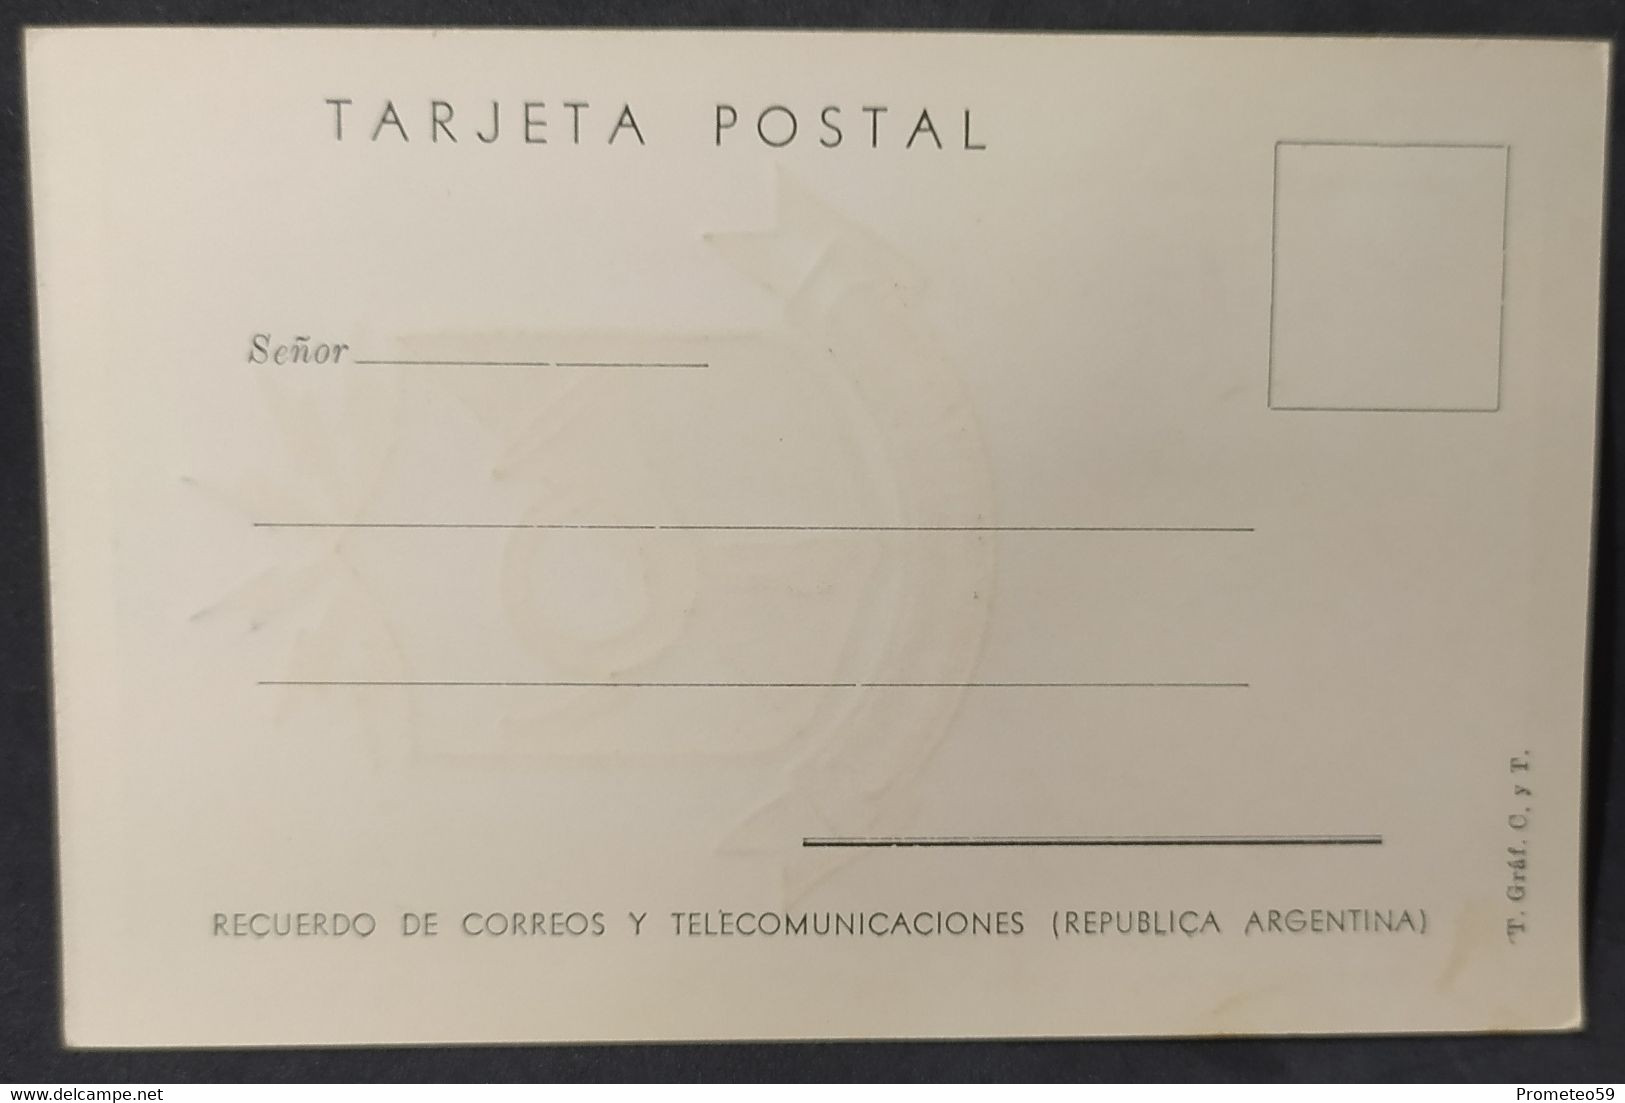 Día De Emisión - Fauna Argentina X 5 - 2/6/1960 - Postzegelboekjes